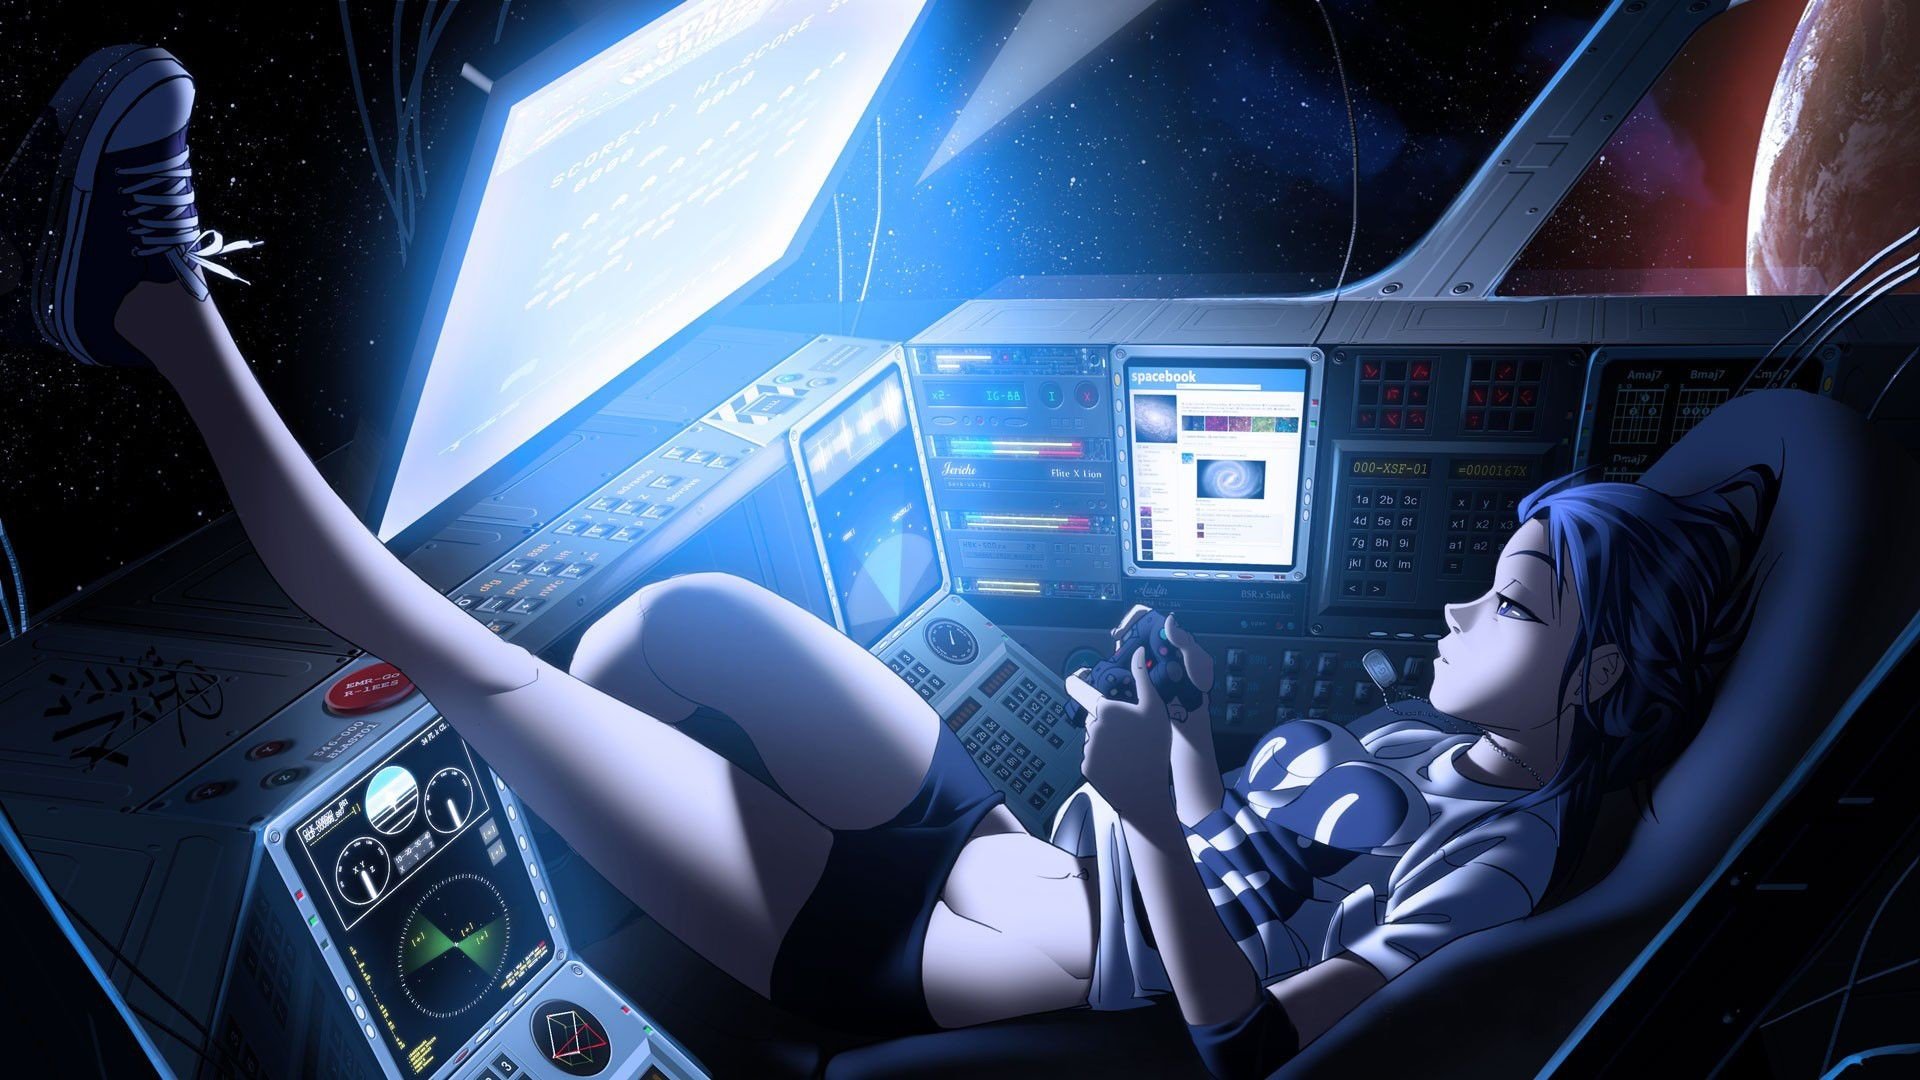 Vashperado__com anime manga cockpit tech mech spaceship Desktop wallpaper